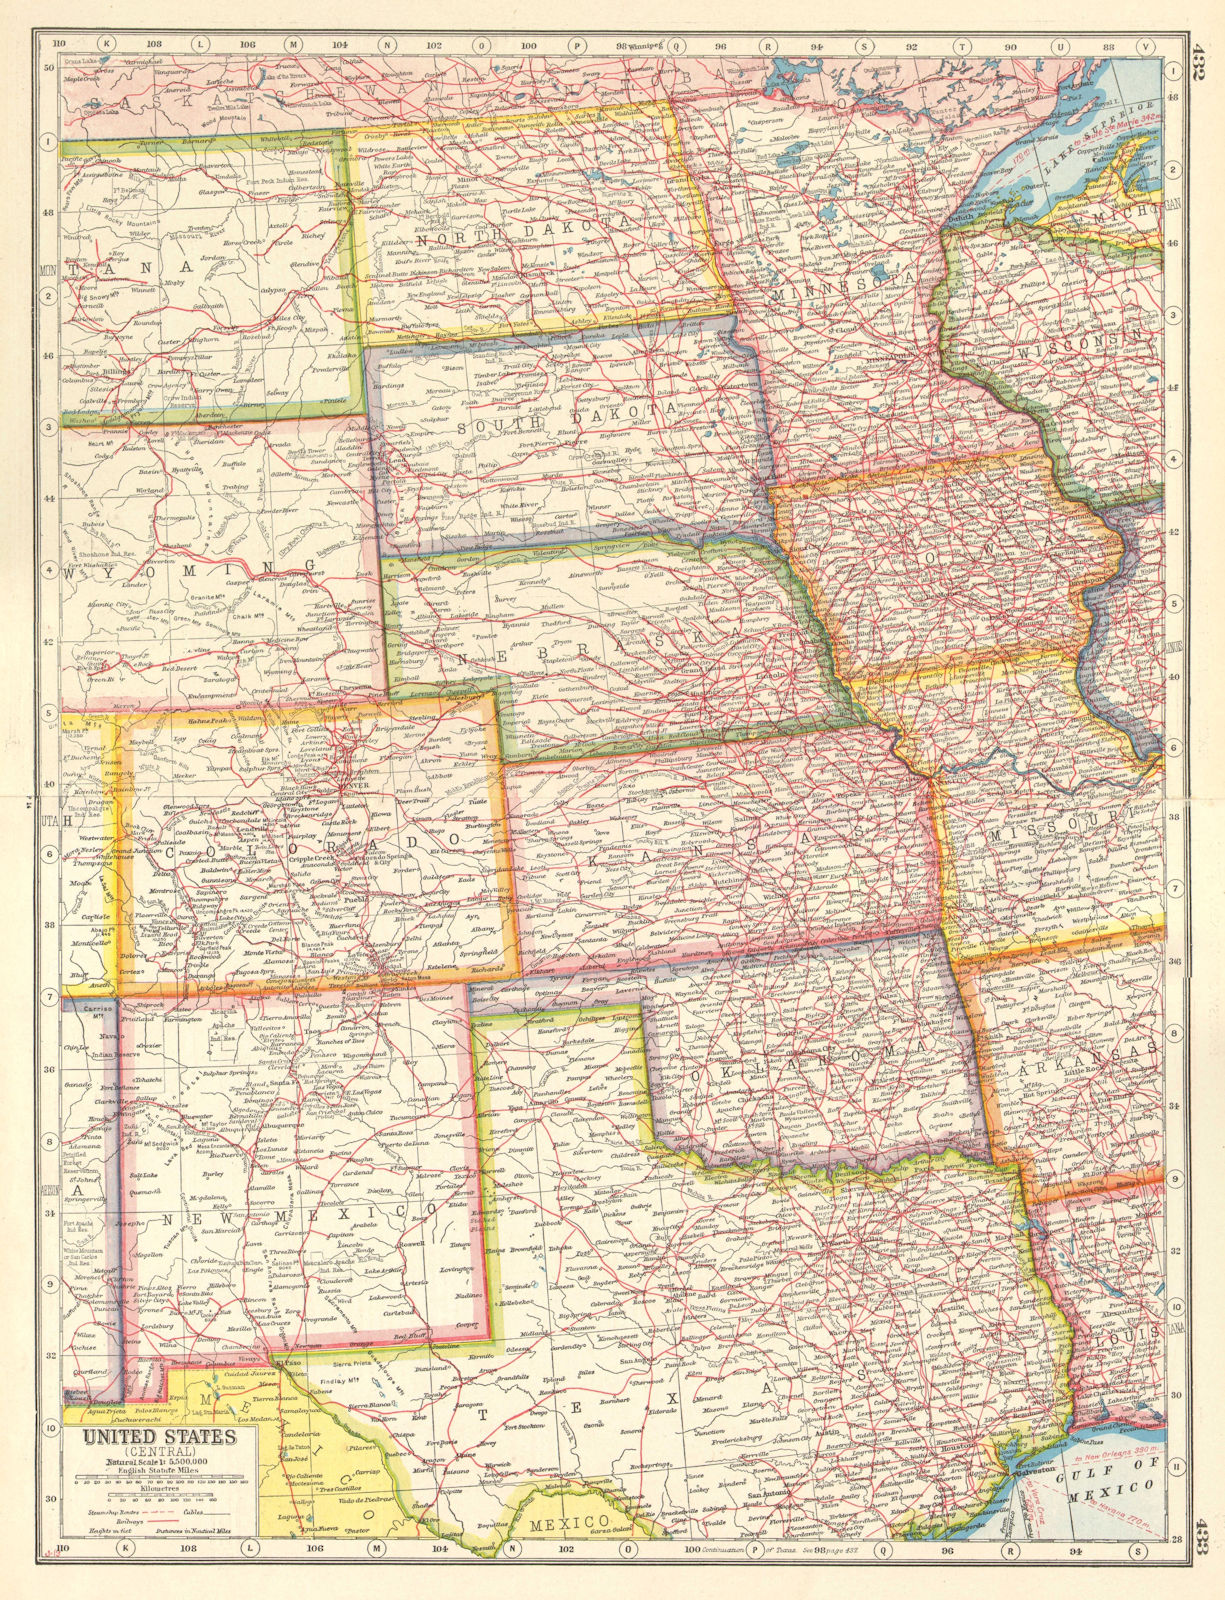 USA PLAINS STATES. ND SD NE MN IA NM OK Texas.United States.HARMSWORTH 1920 map